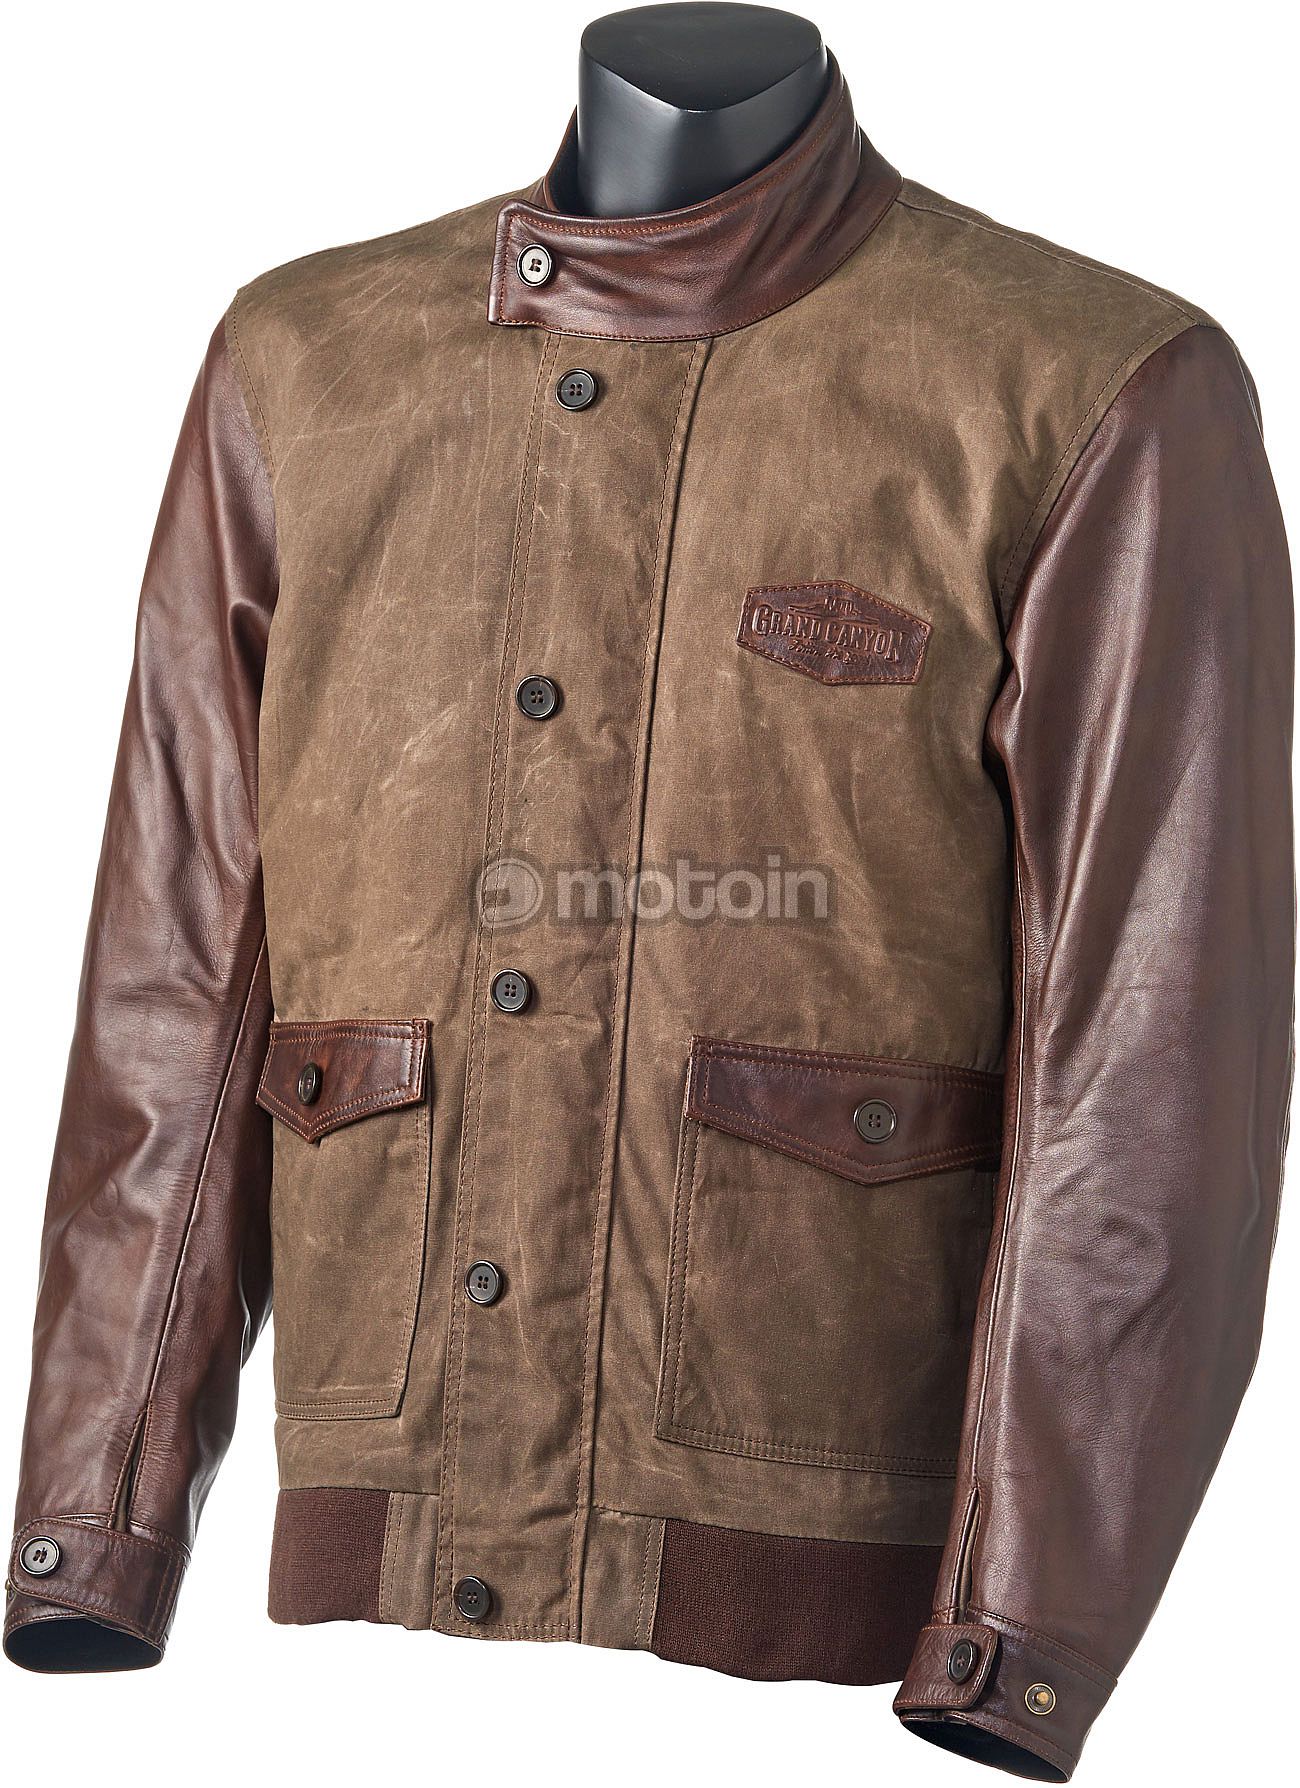 GC Bikewear Hillberry, кожаная текстильная куртка